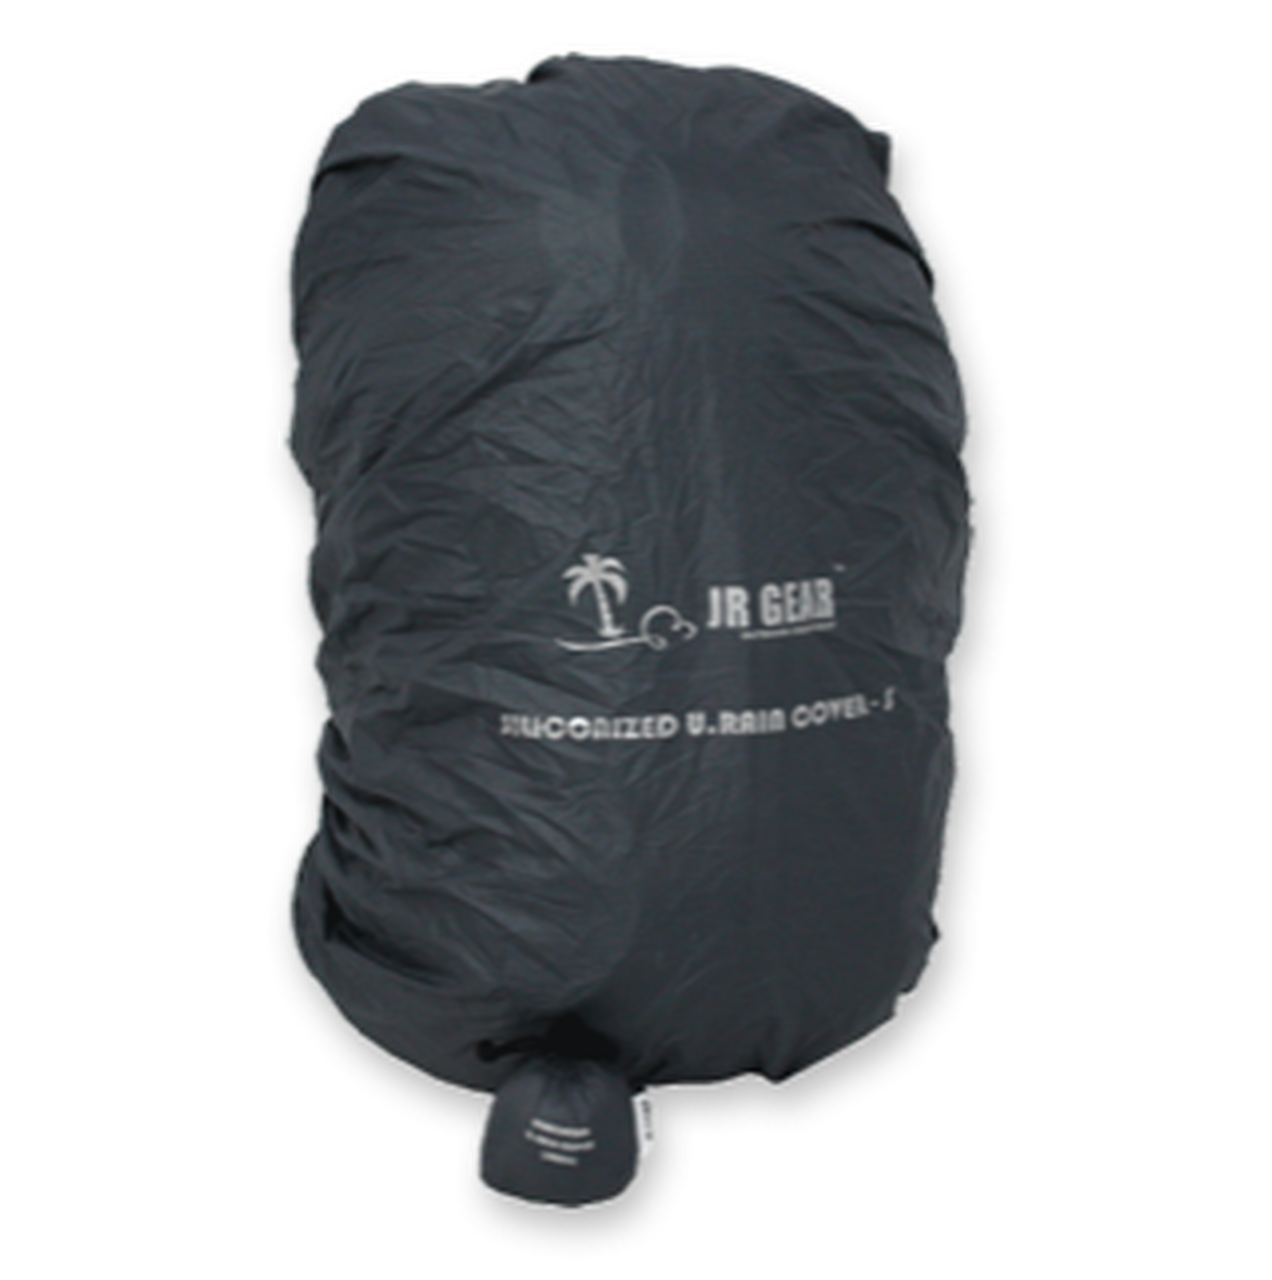 JR Gear Siliconized U-Shape Rain Covers for Backpacks